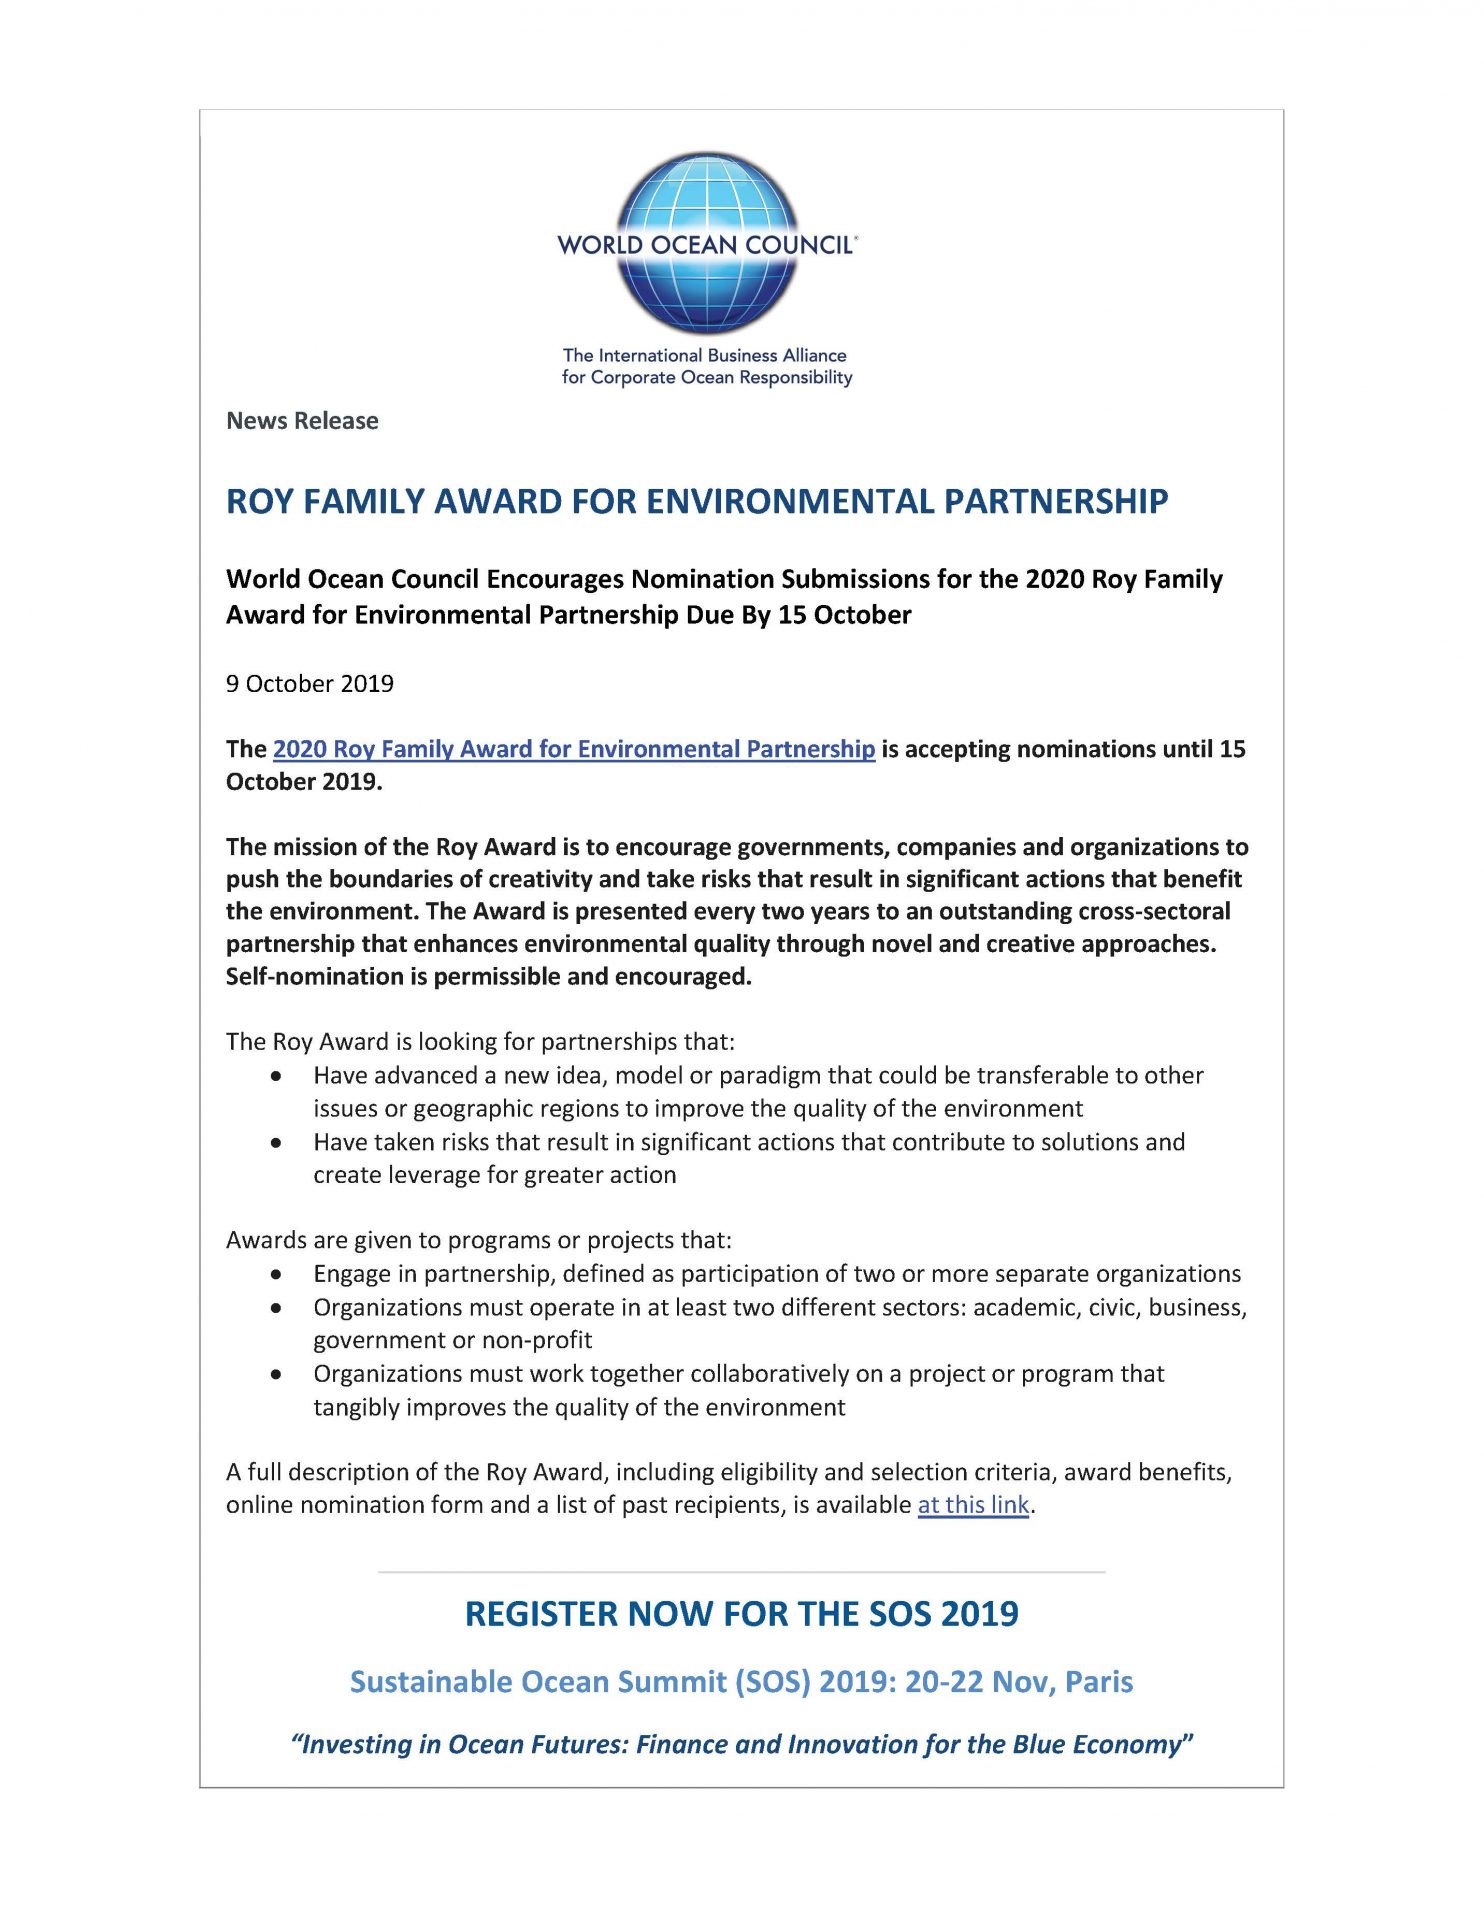 Roy Family Award for Environmental Partnership - 9 October 2019